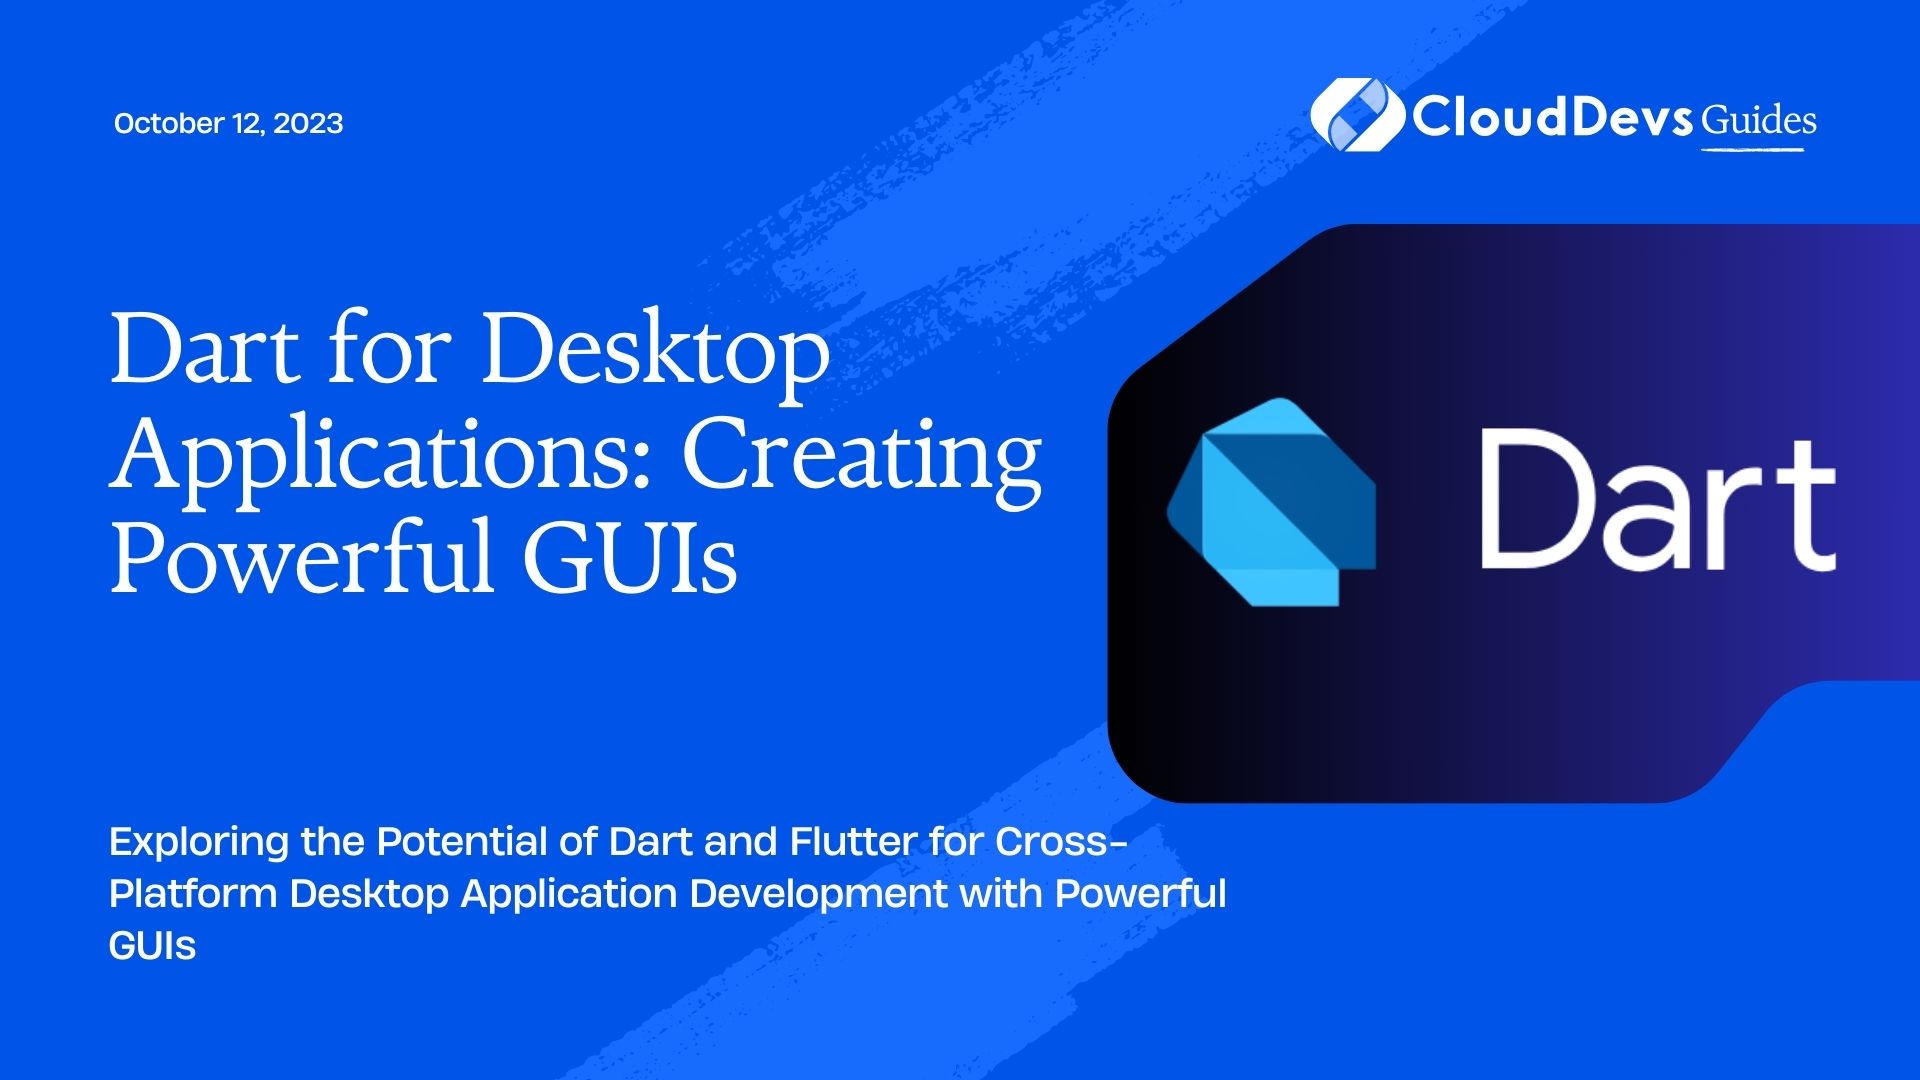 Dart for Desktop Applications: Creating Powerful GUIs